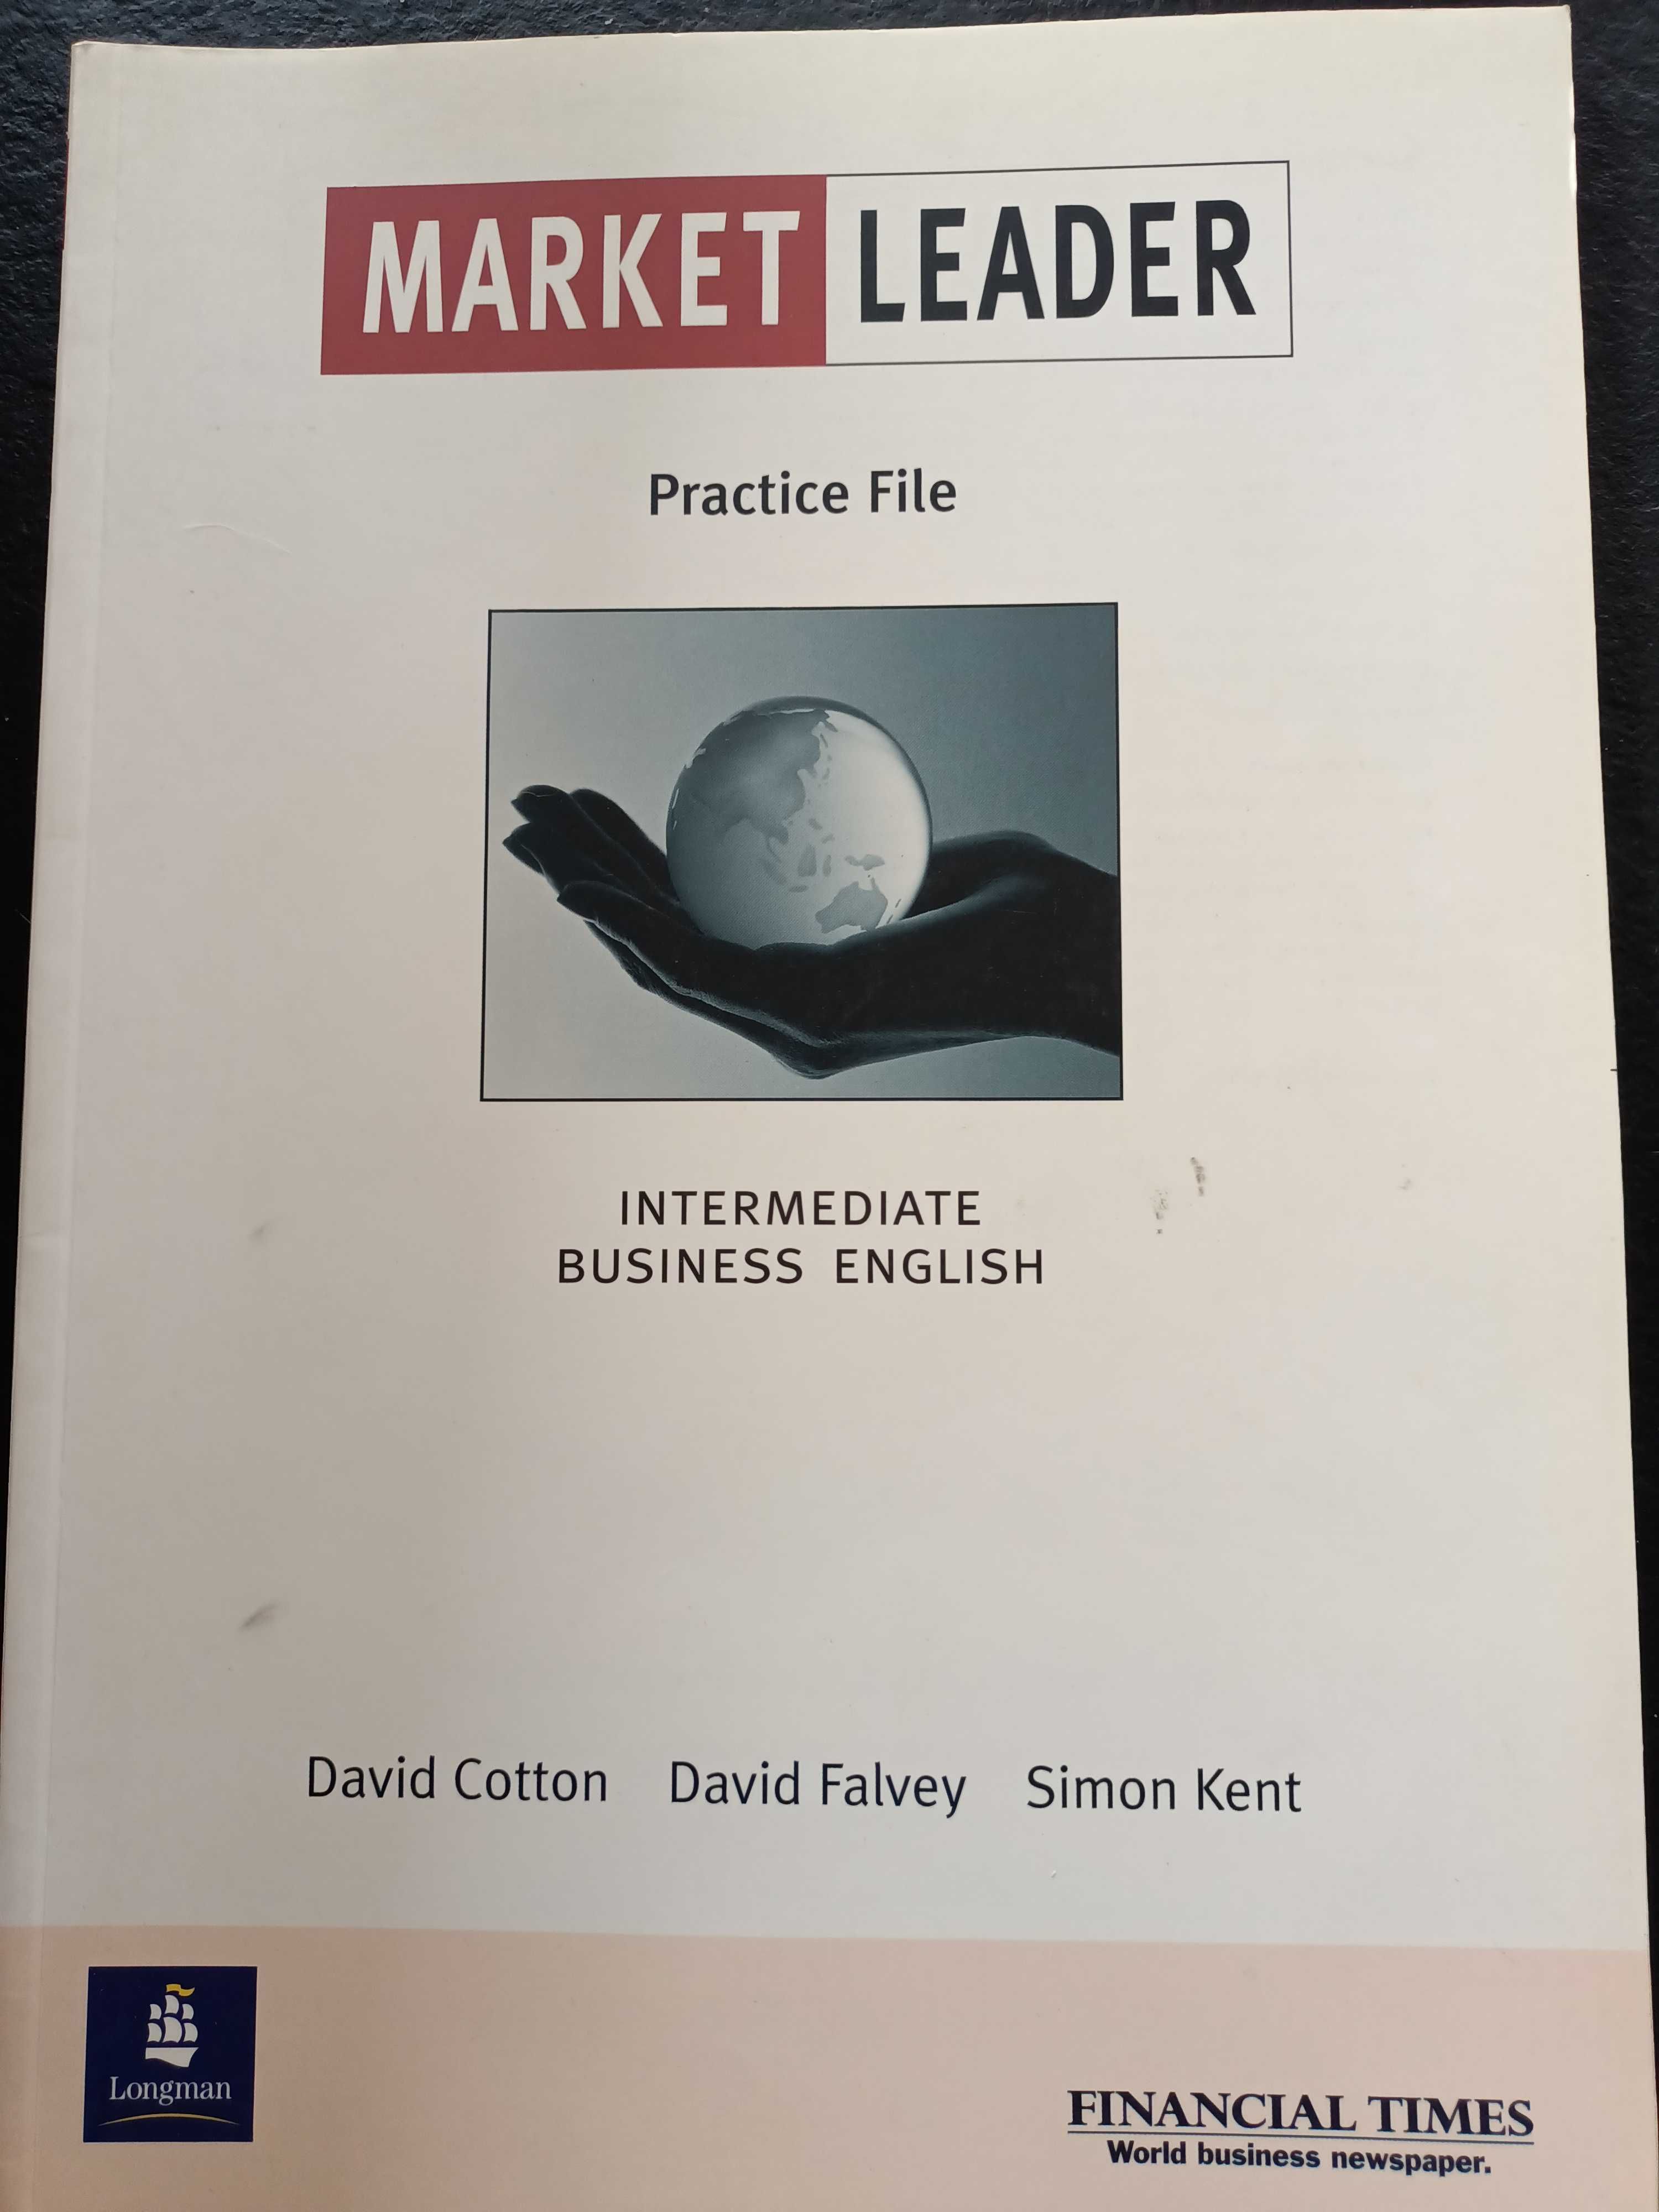 Market Leader business english